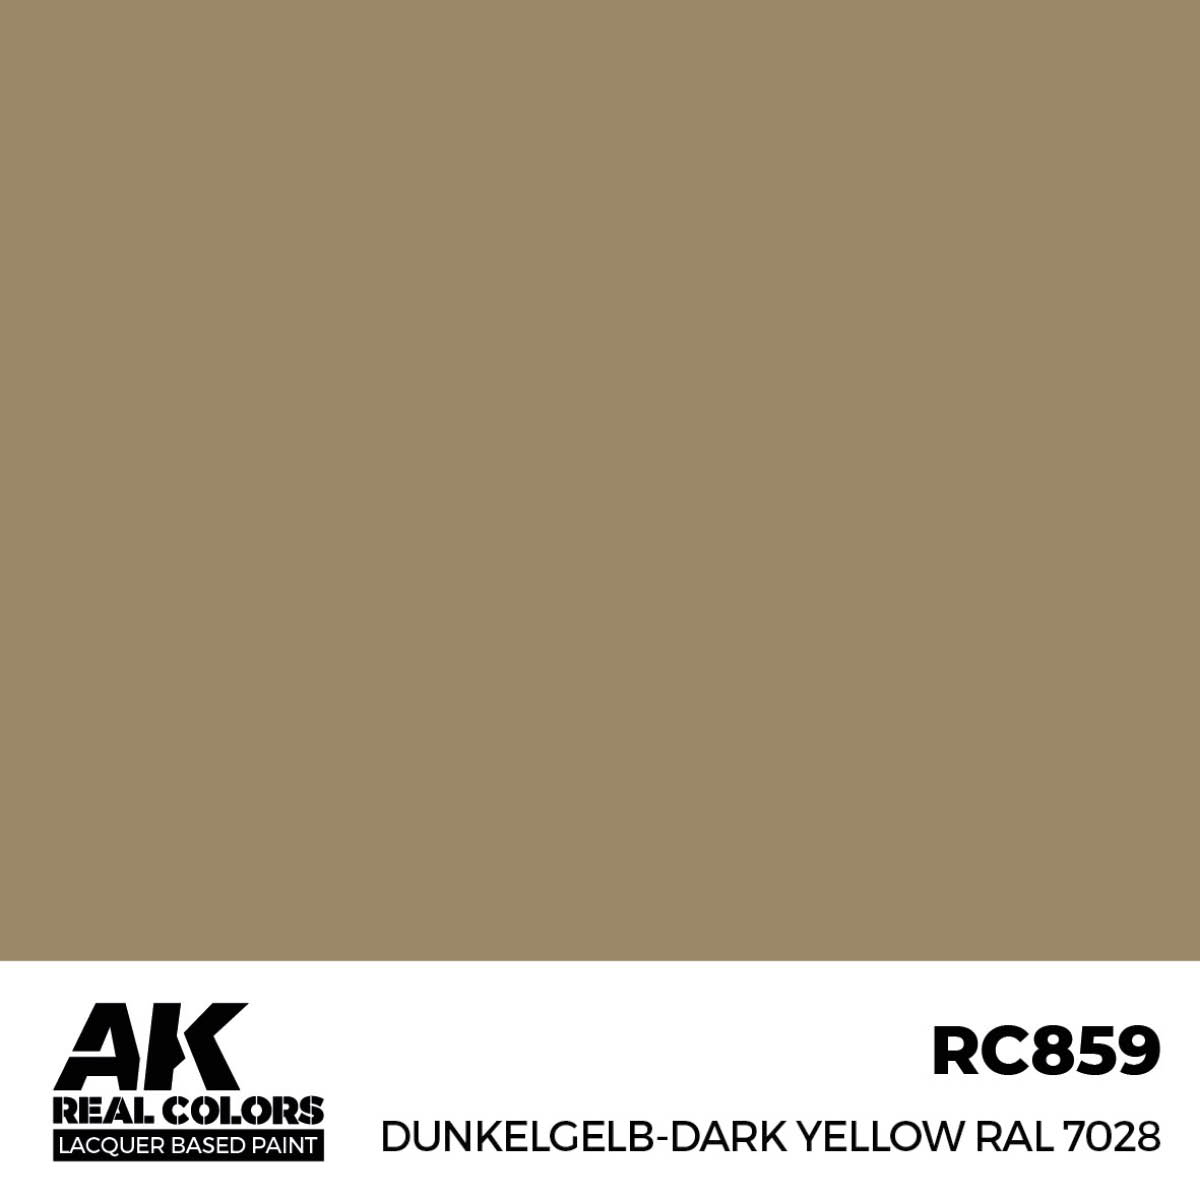 Dunkelgelb-Dark Yellow RAL 7028